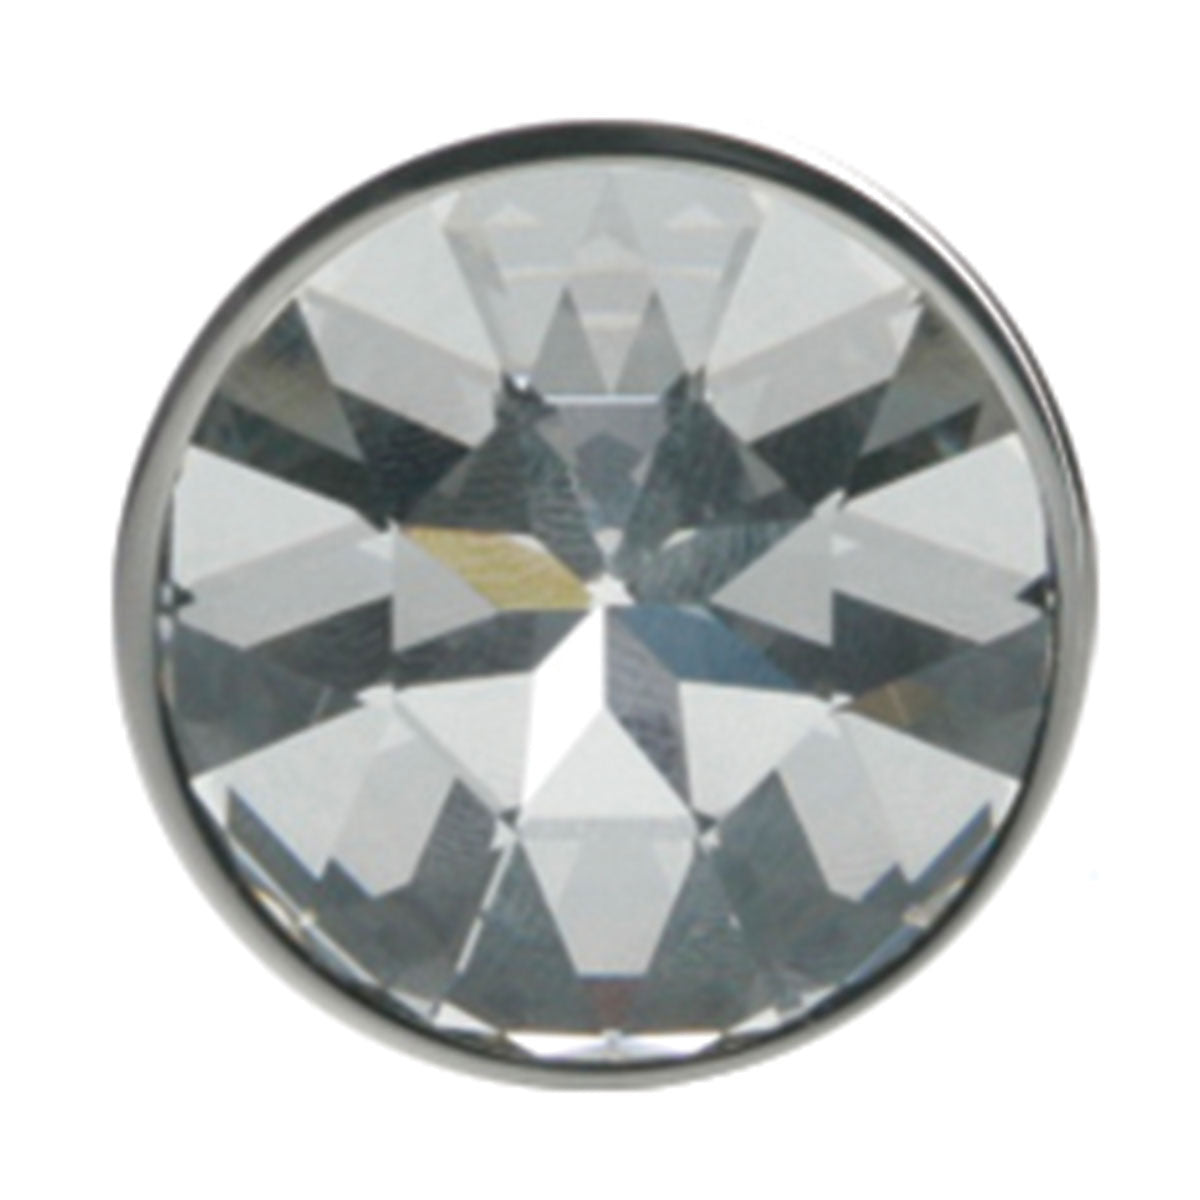 Pretty Plugs Stainless Steel Butt Plug w/ Swarovski Crystal - Small Crystal Clear